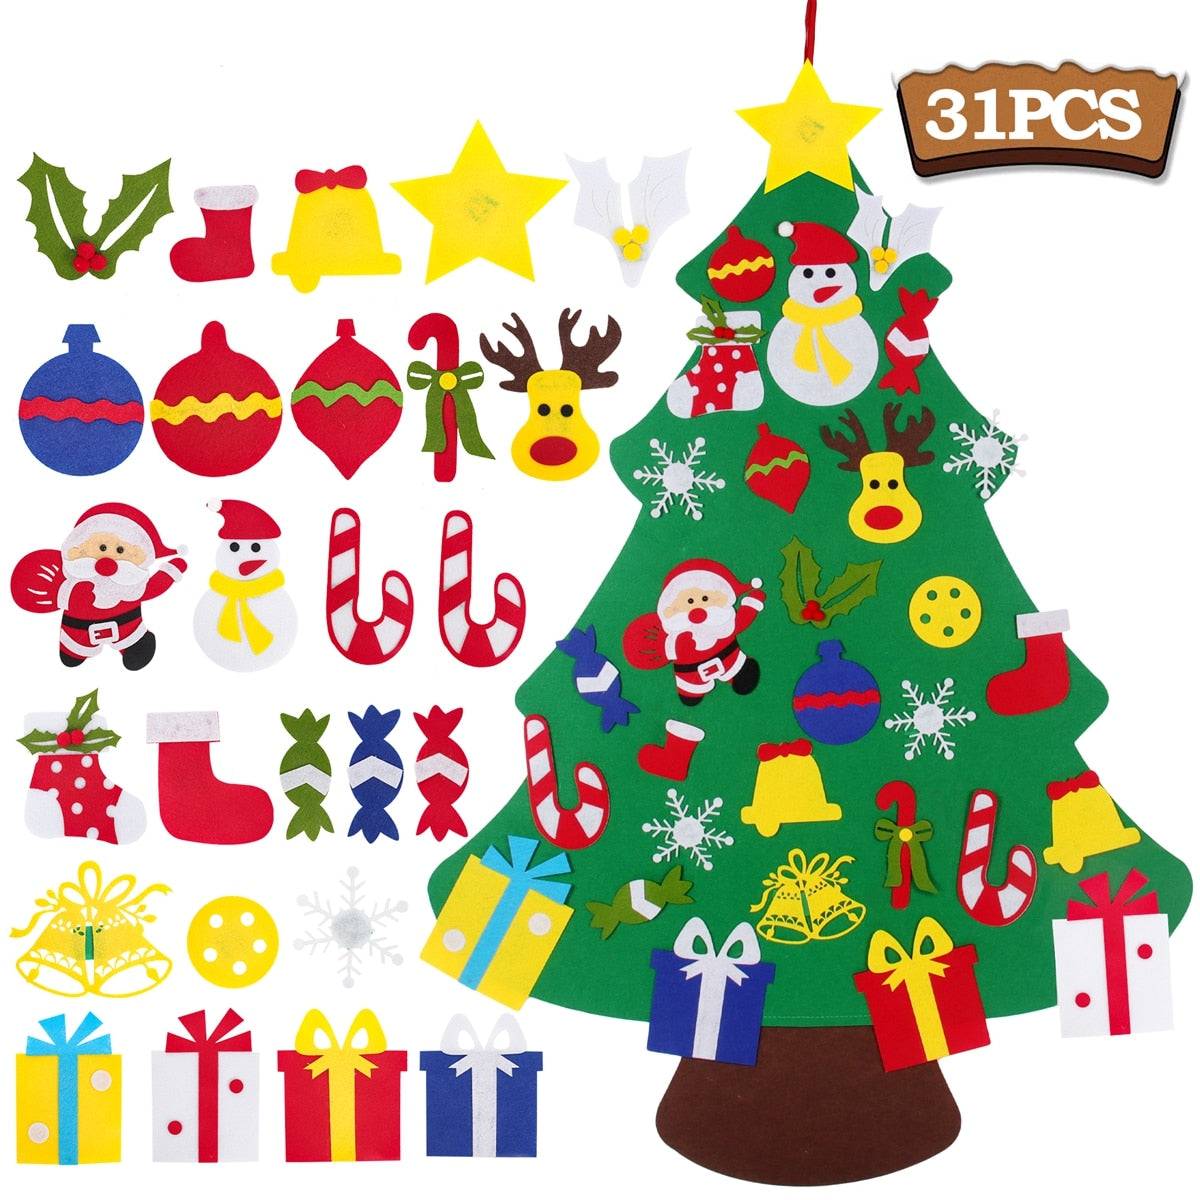 DIY Felt Christmas Tree Merry Christmas Decorations For Home 2021 Cristmas Ornament Xmas Navidad Gifts Santa Claus New Year Tree baby magazin 